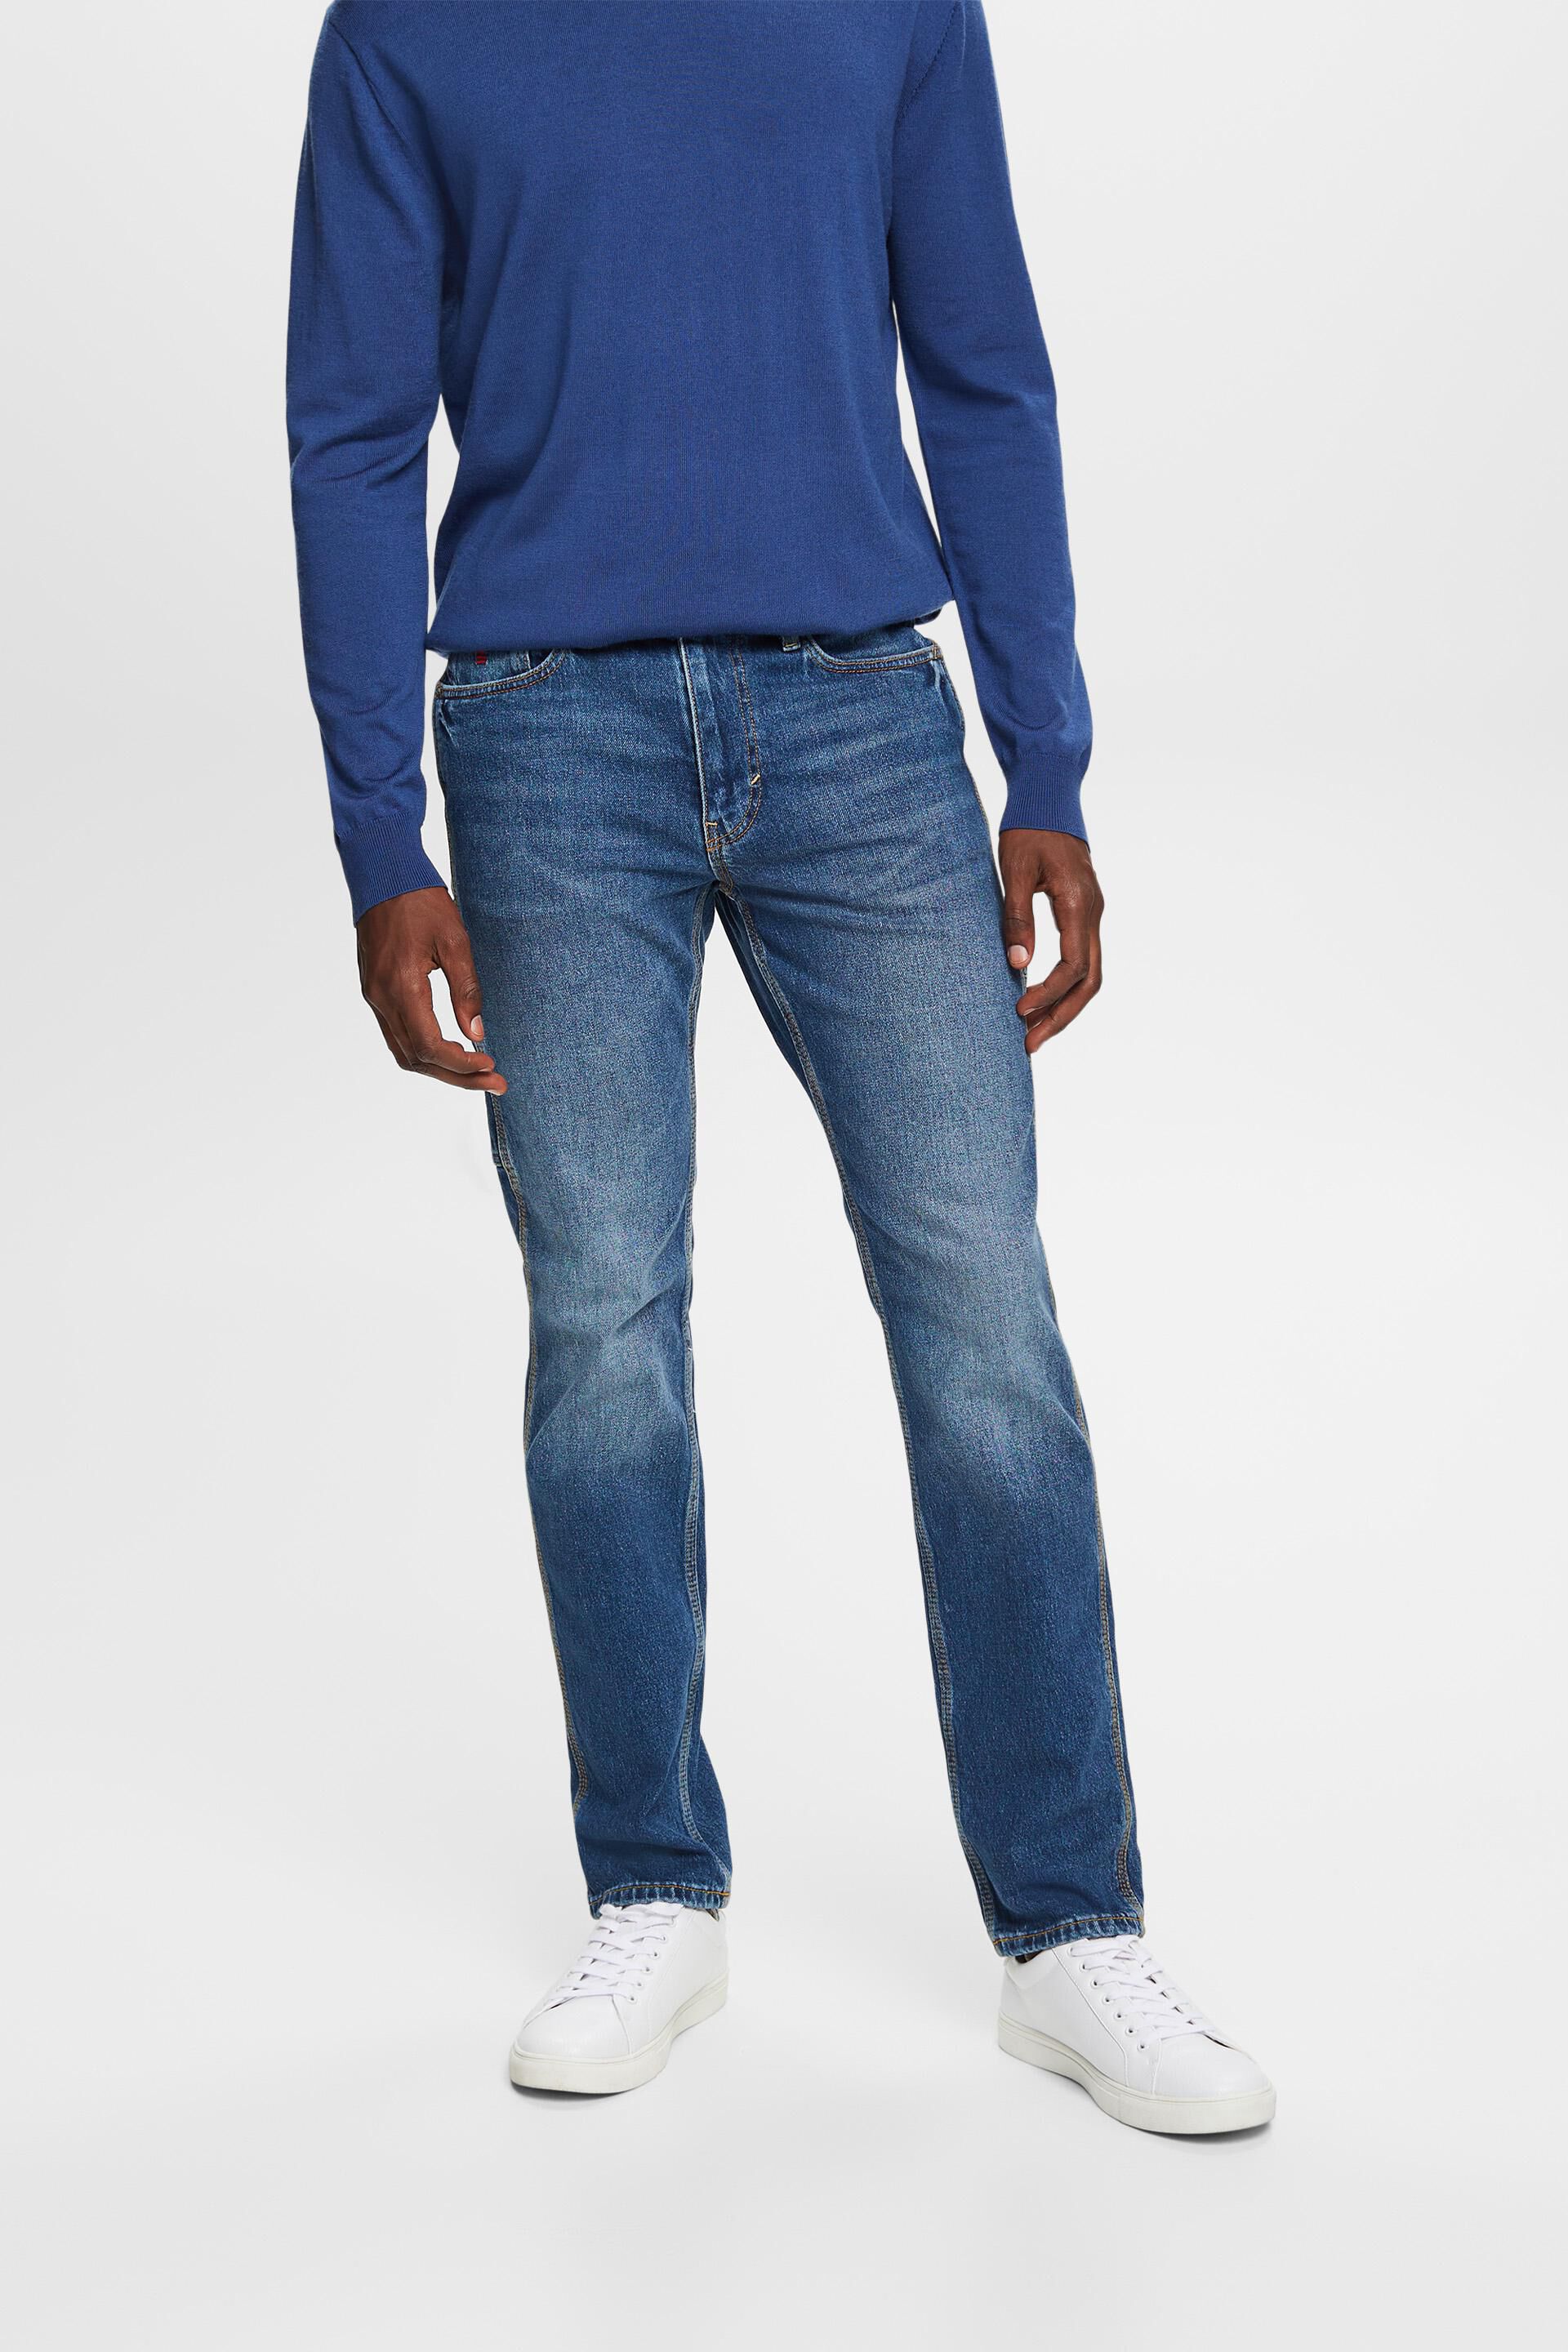 Esprit Carpenter fit jeans straight